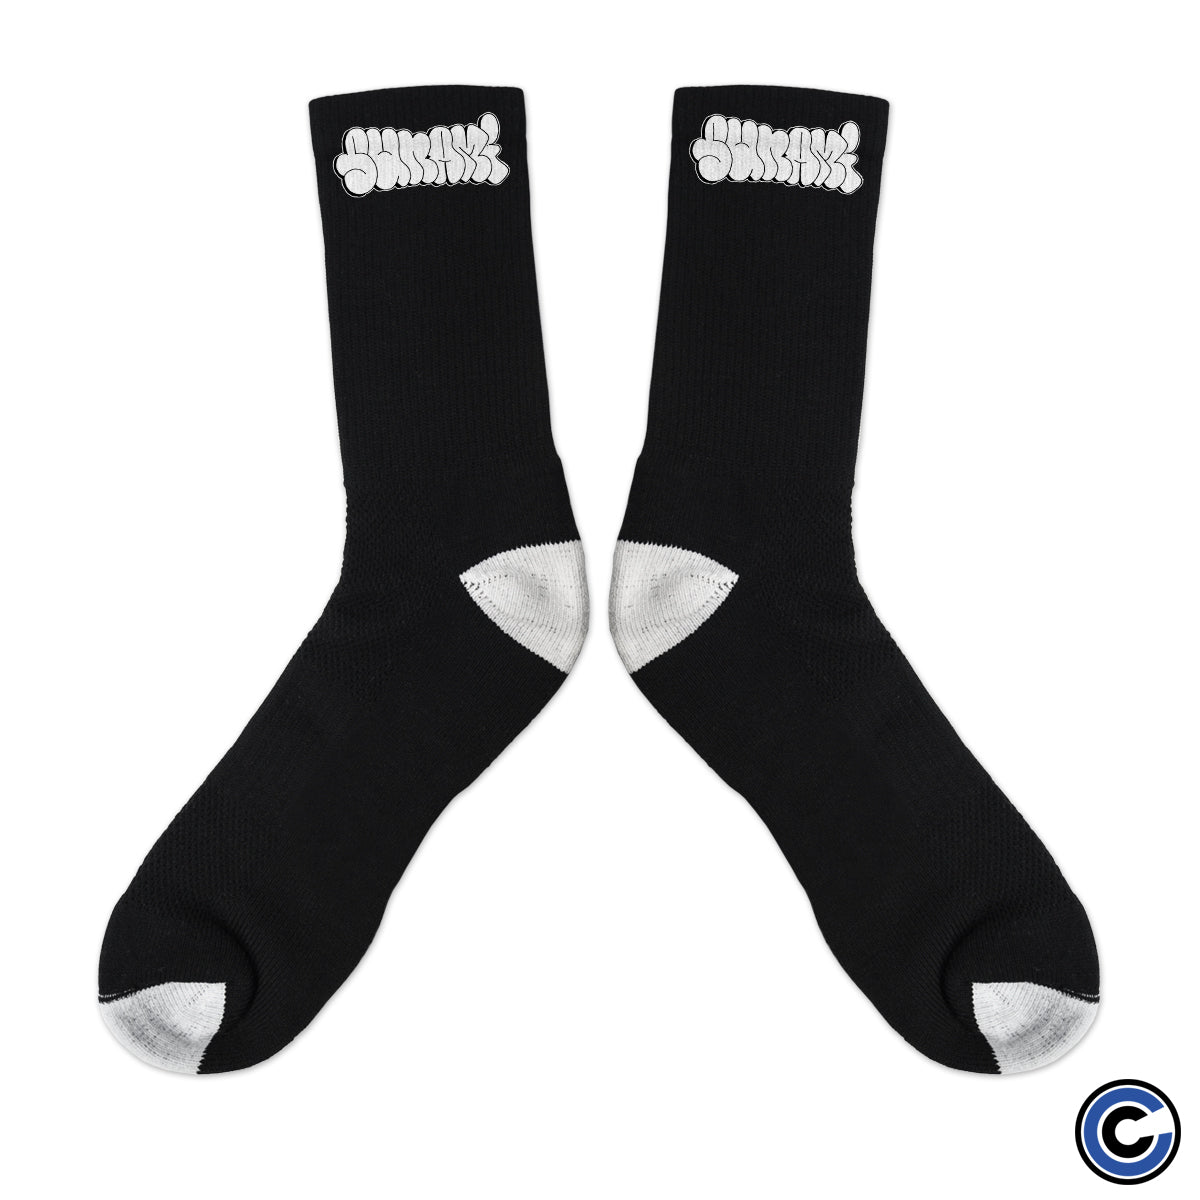 Sunami "Logo" Socks